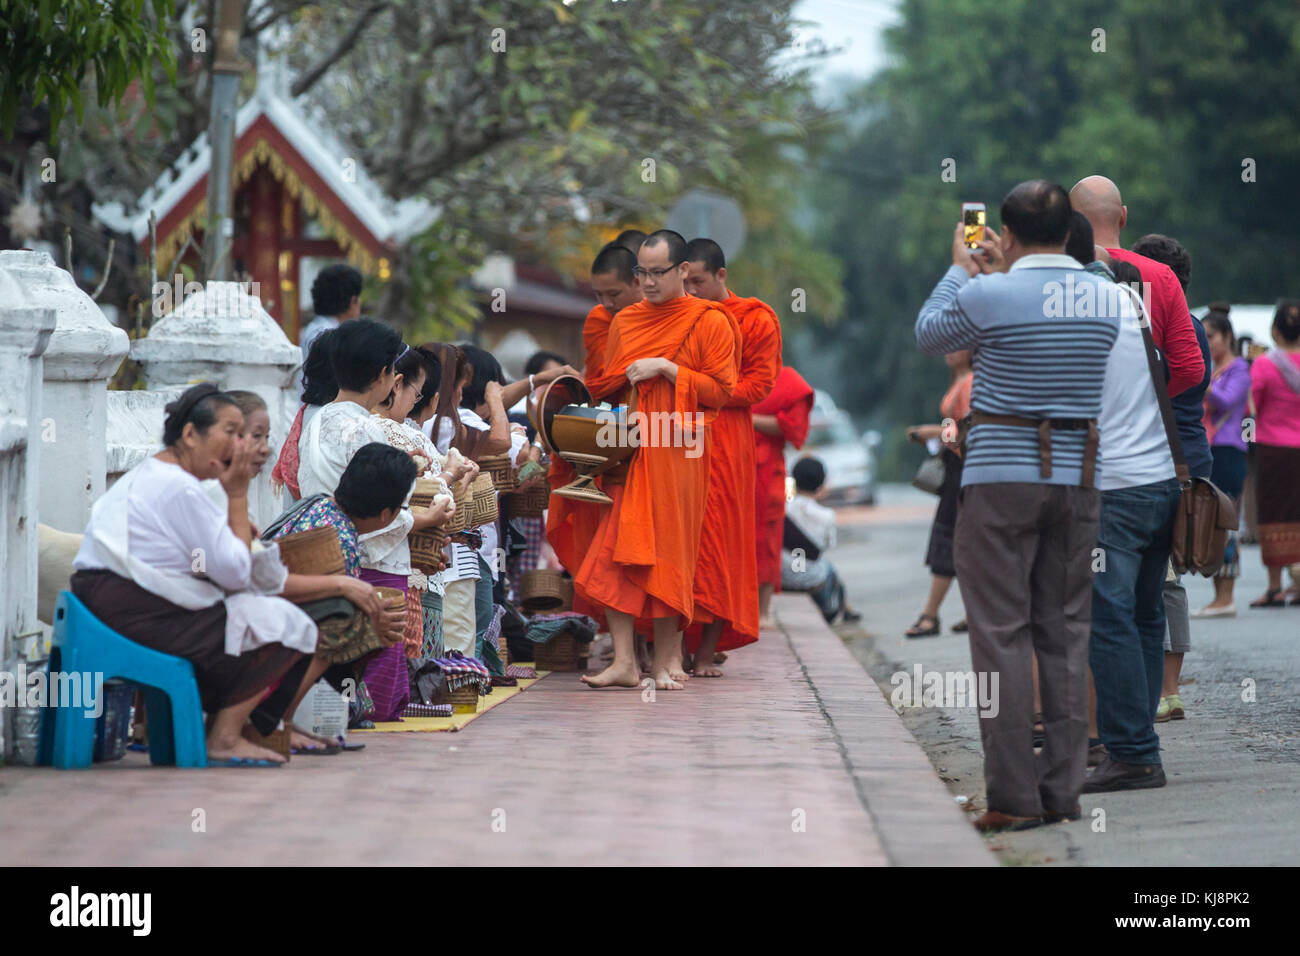 Luang Prabang, Laos - November 19, 2017: Torists taking photos of buddhist monks on everyday morning traditional alms giving in Luang Prabang, Laos. Stock Photo